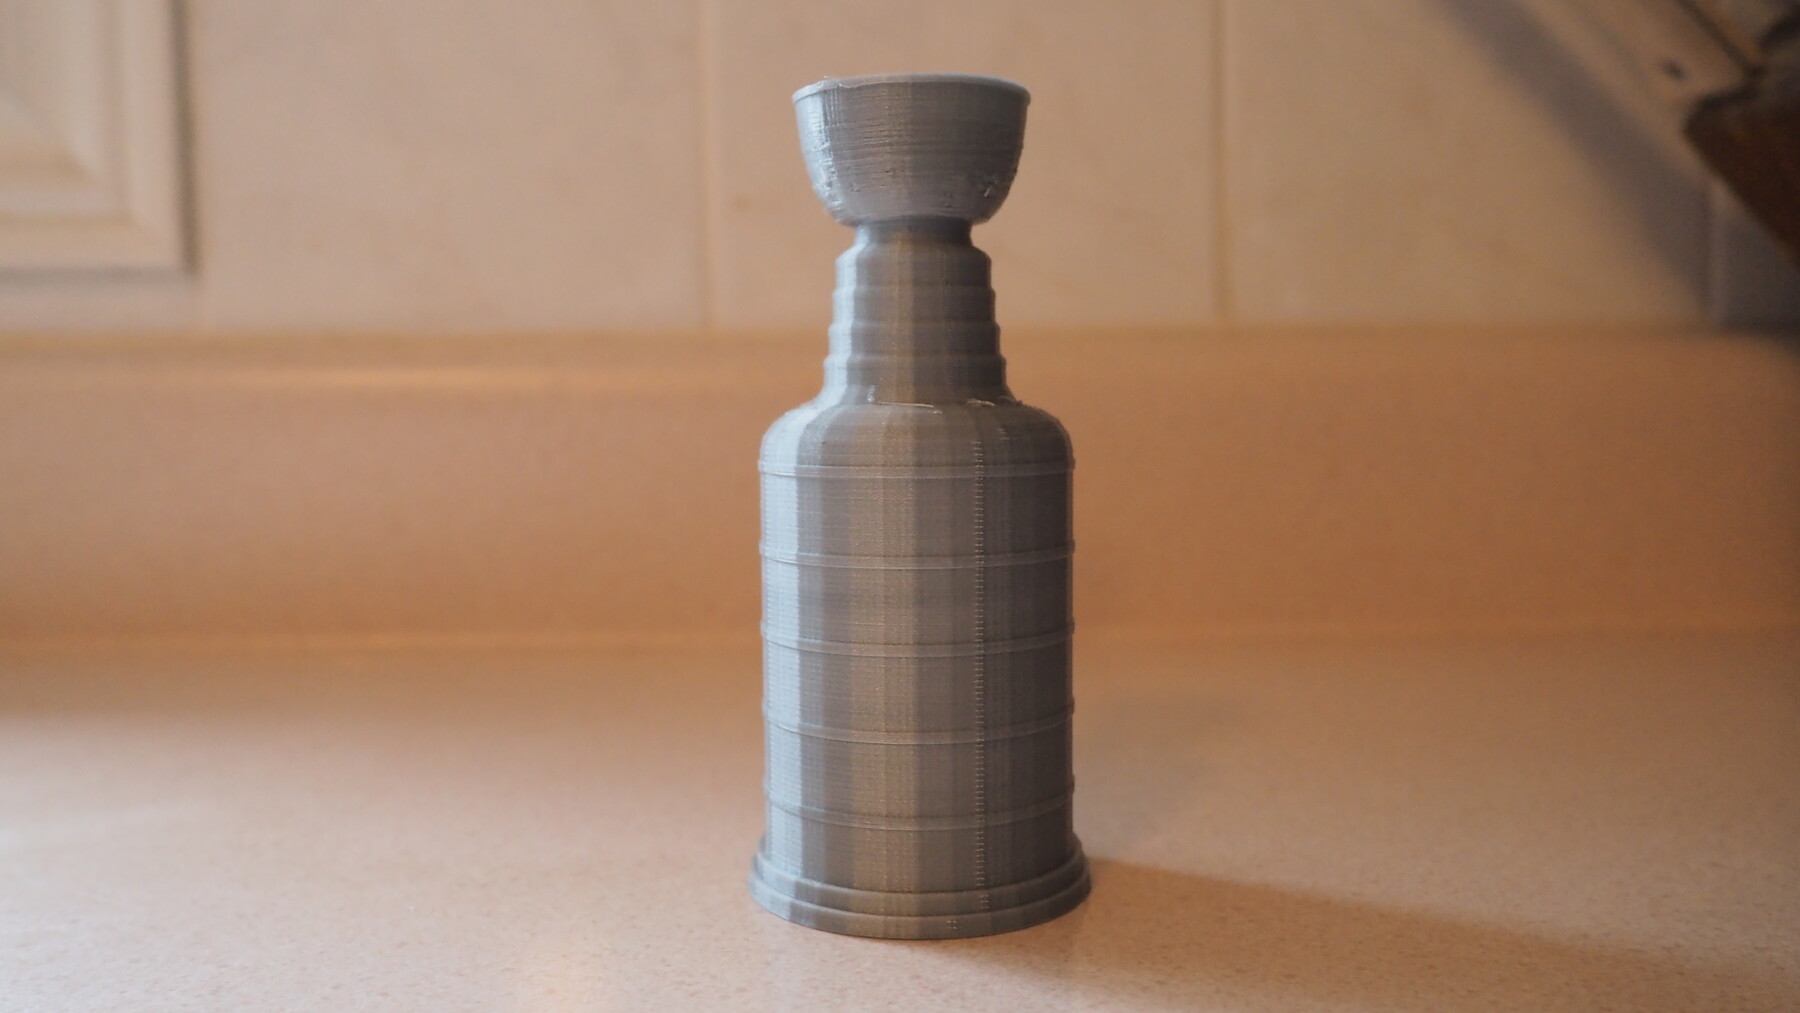 LEGO Mini Stanley Cup